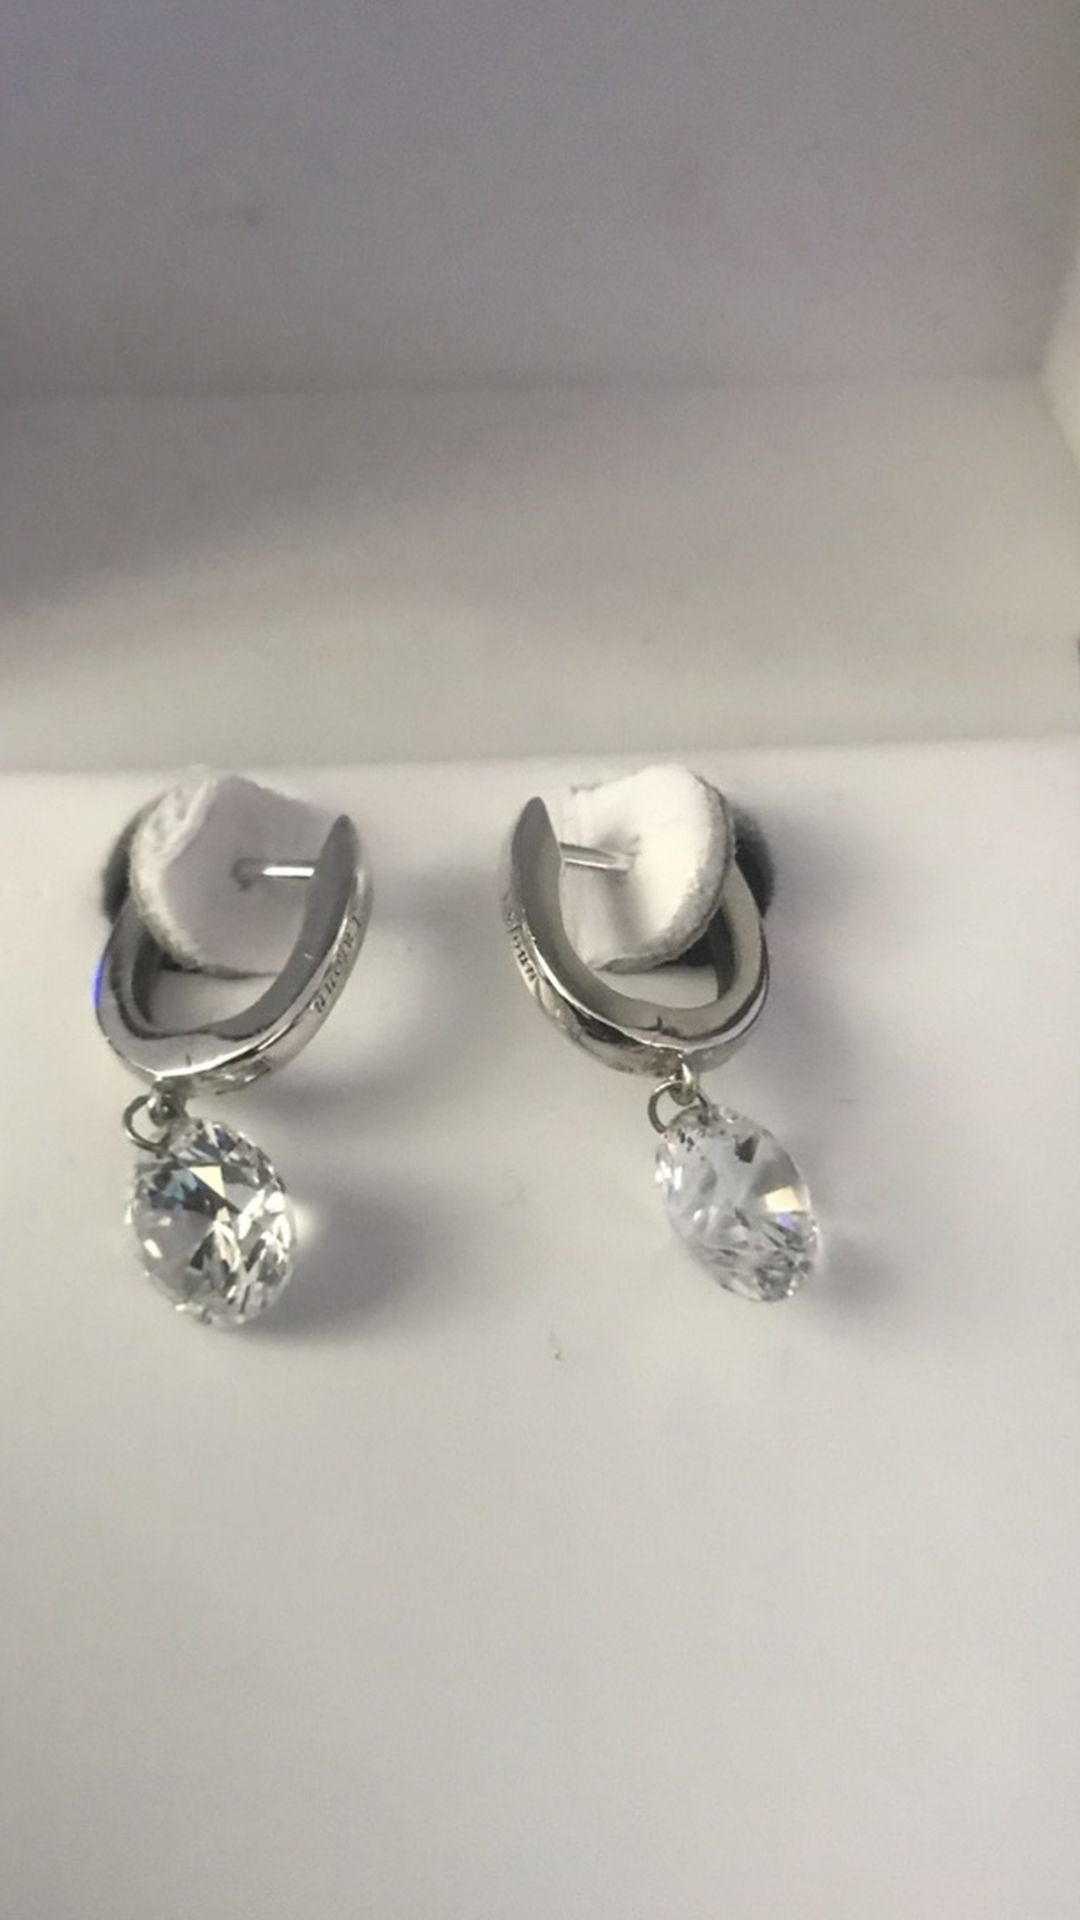 Simulated diamond dangled earrings